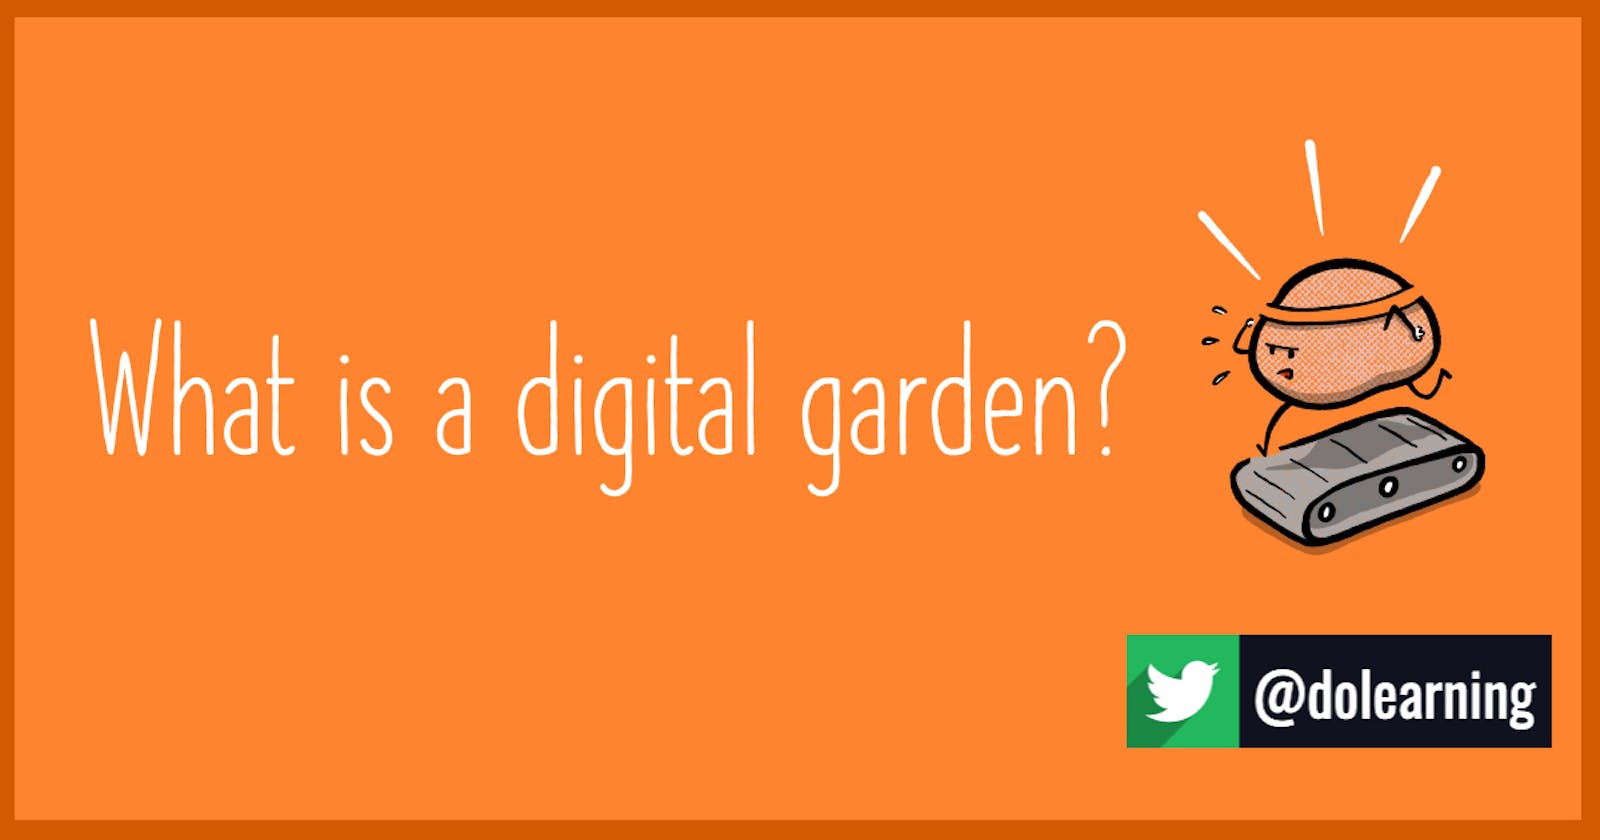 What is a digital garden?